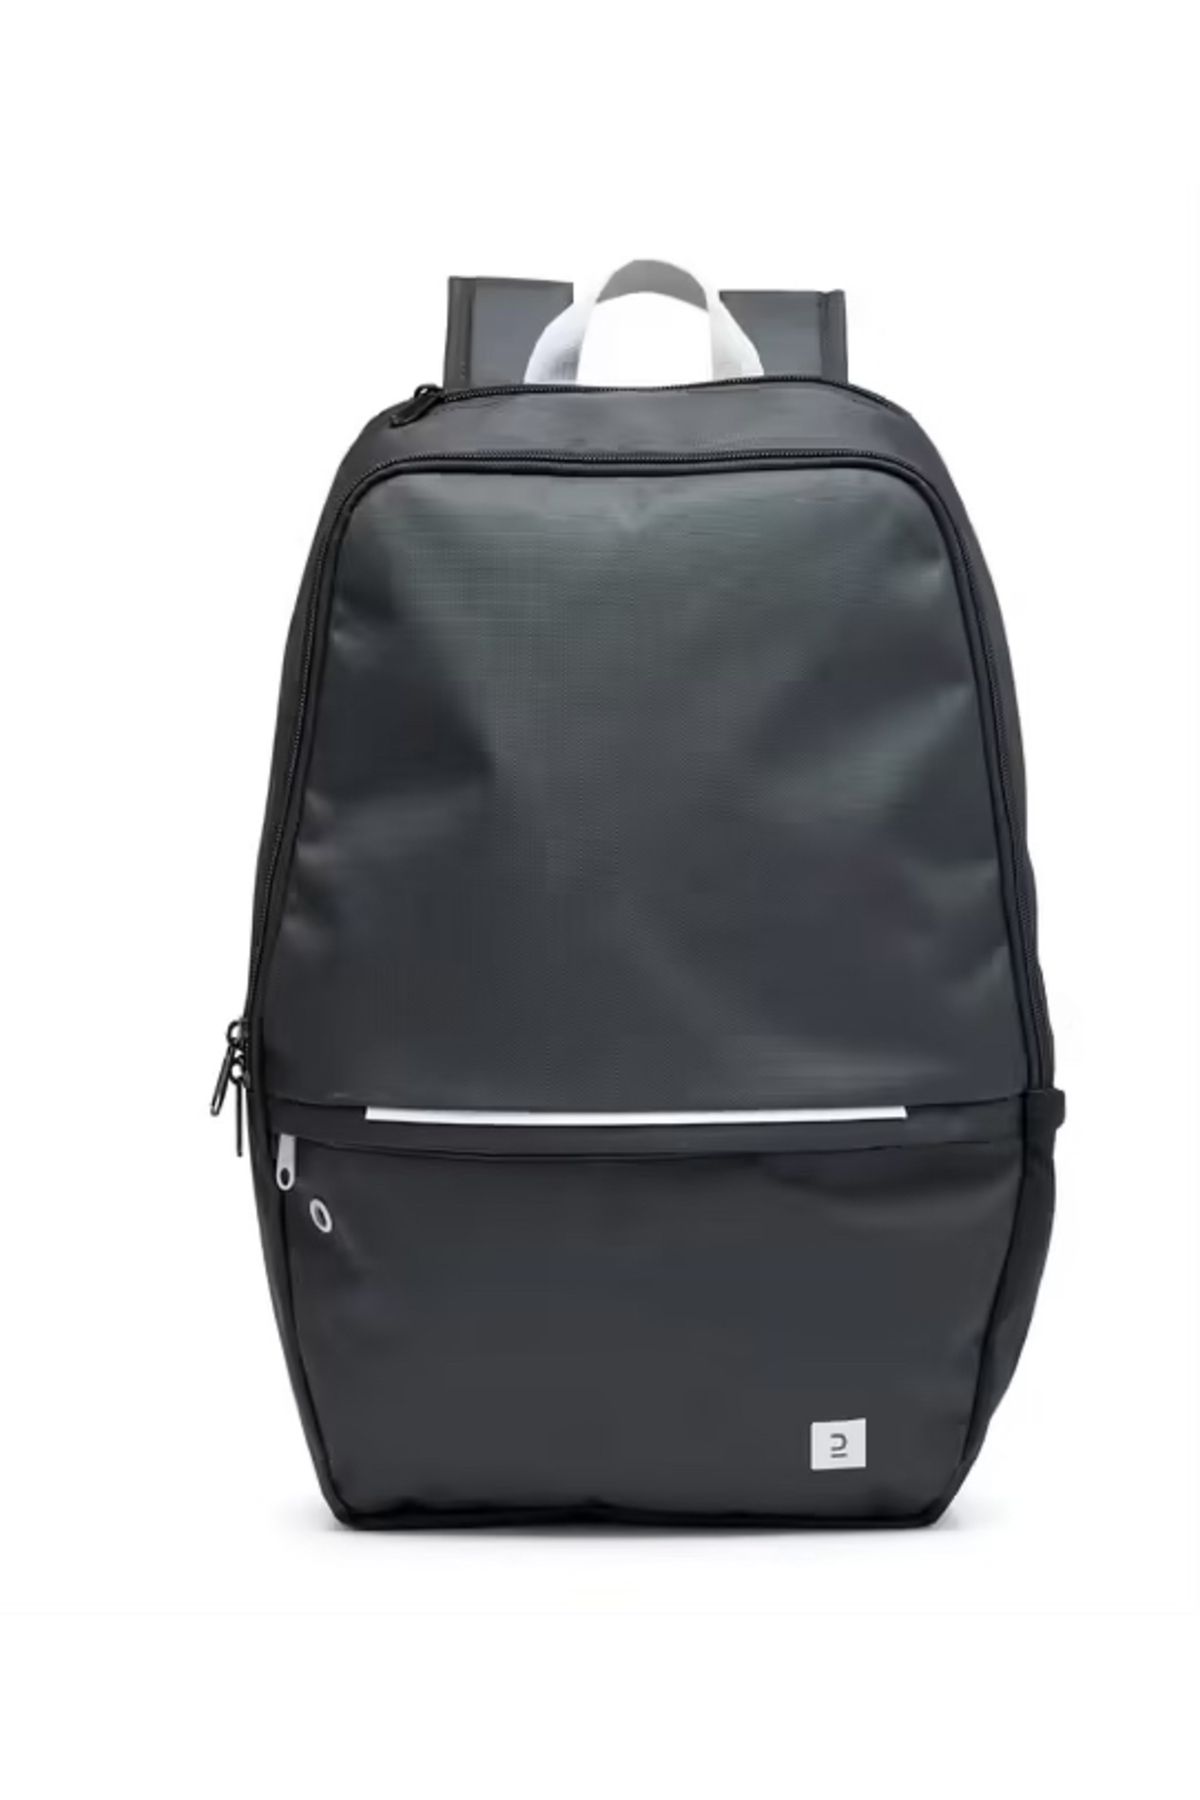 Decathlon Okul çantası Sırt Çantası - 17 L - Siyah - Essential